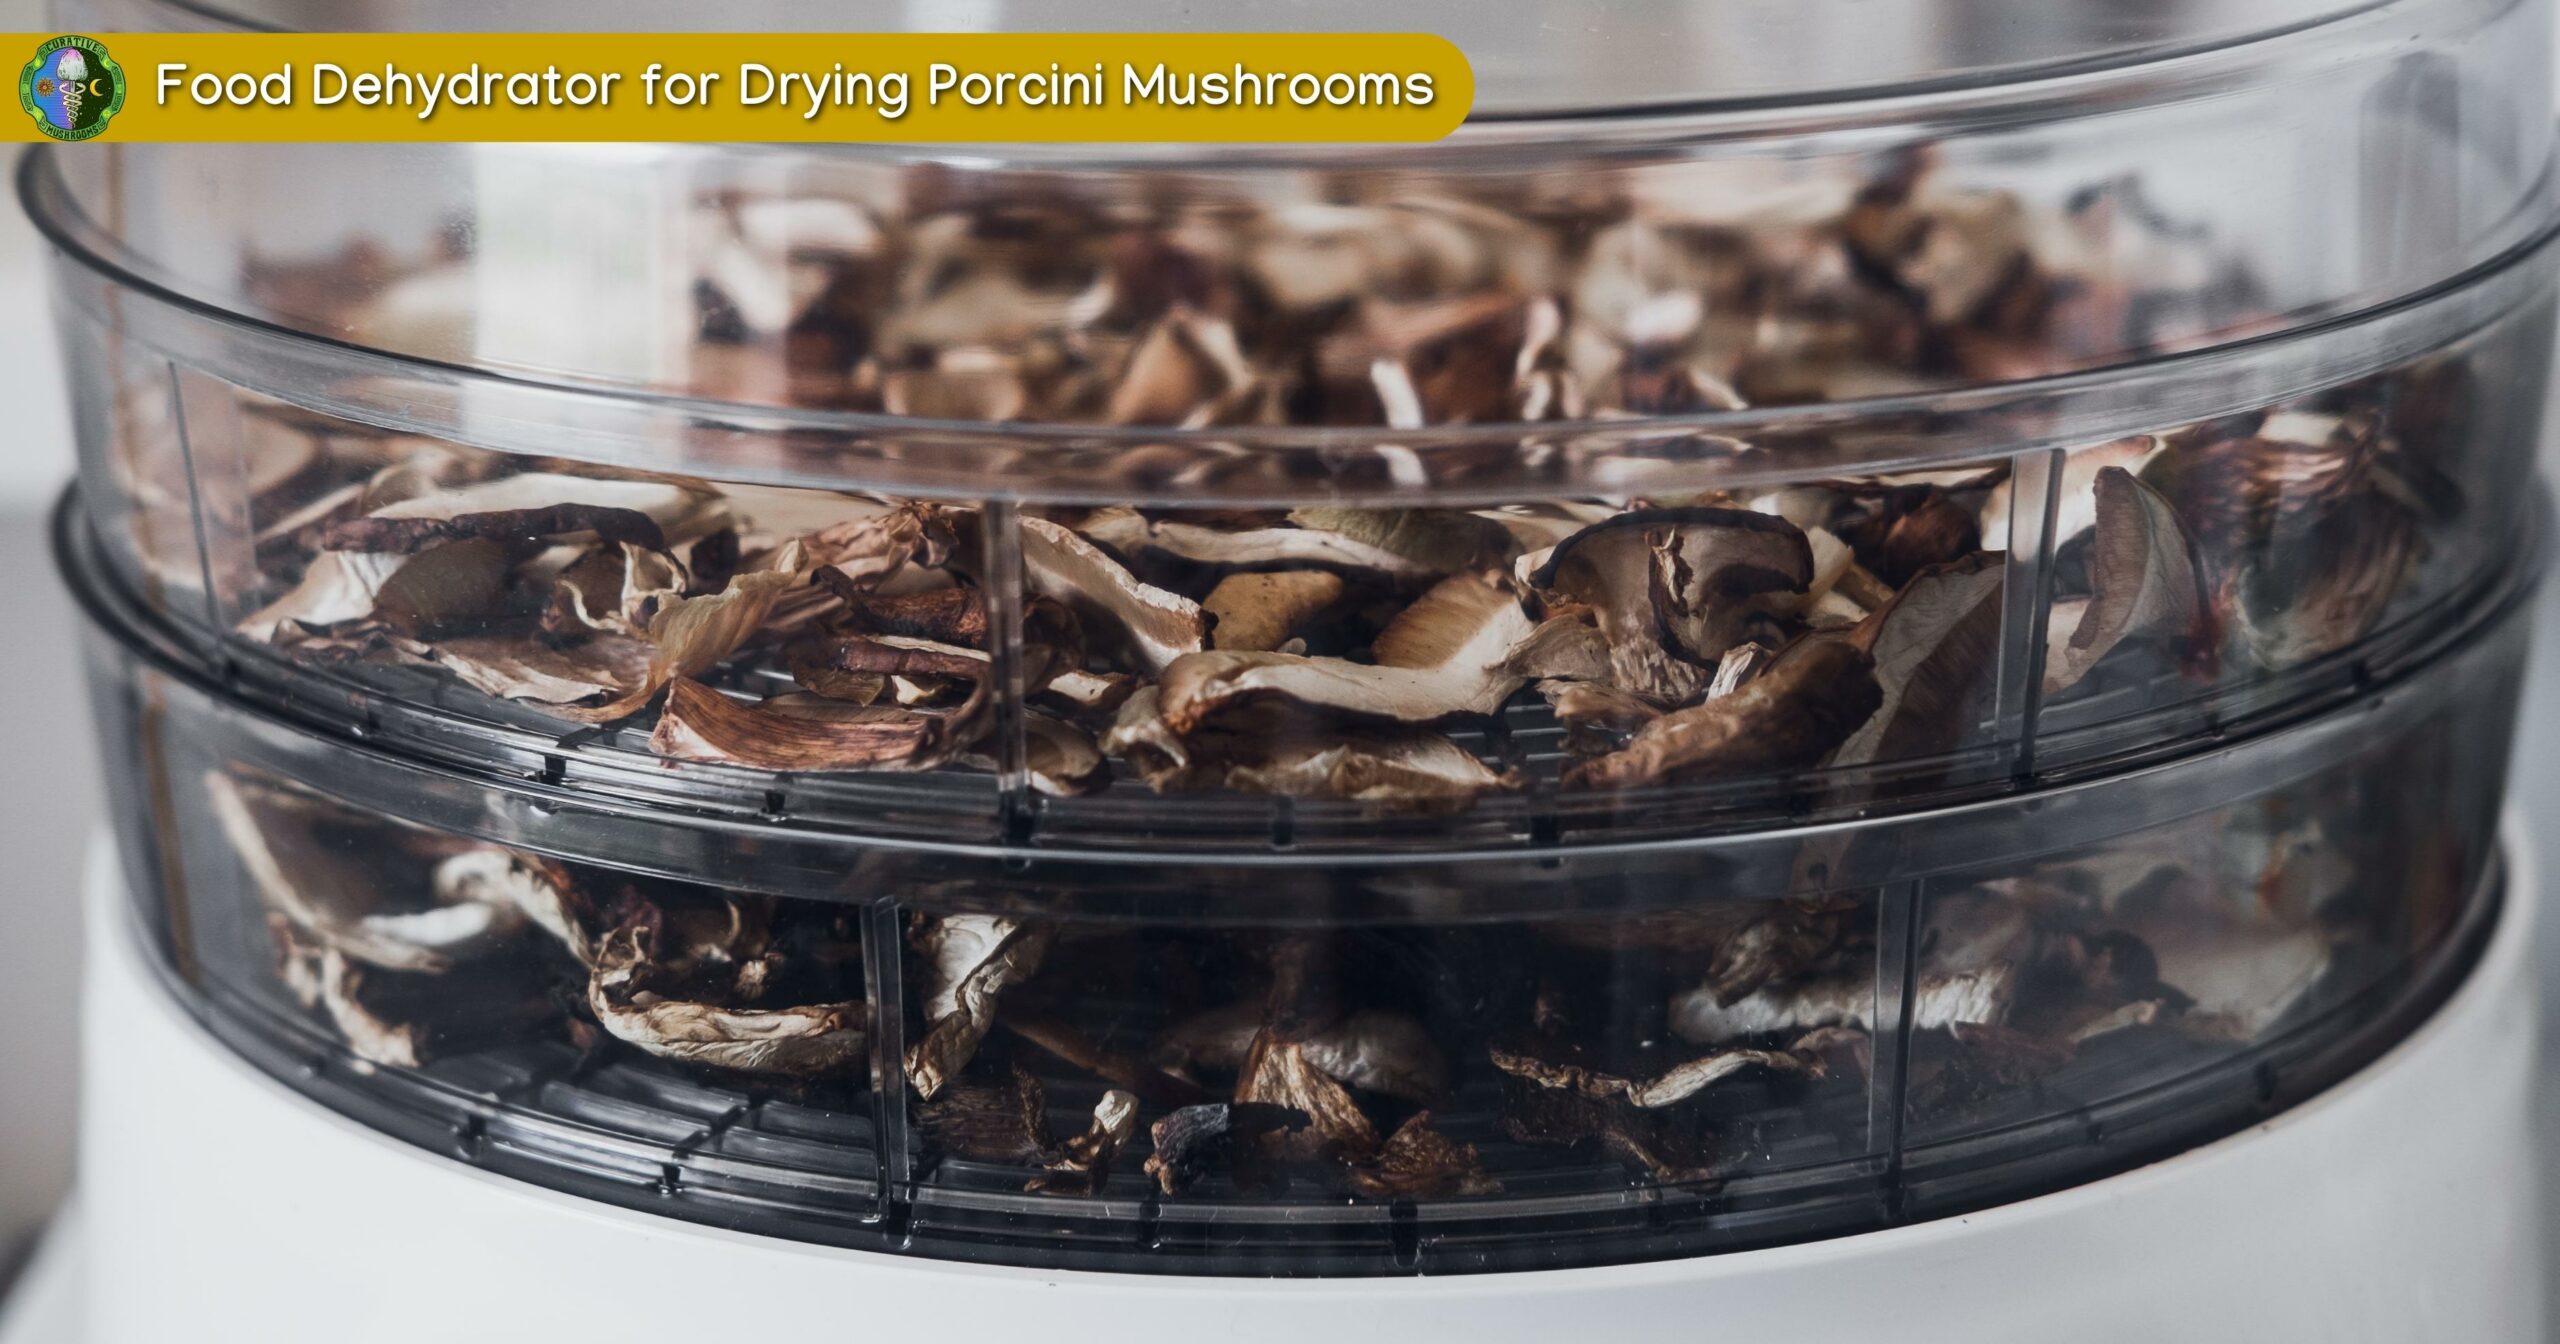 Food Dehydrator for Drying Porcini Mushrooms